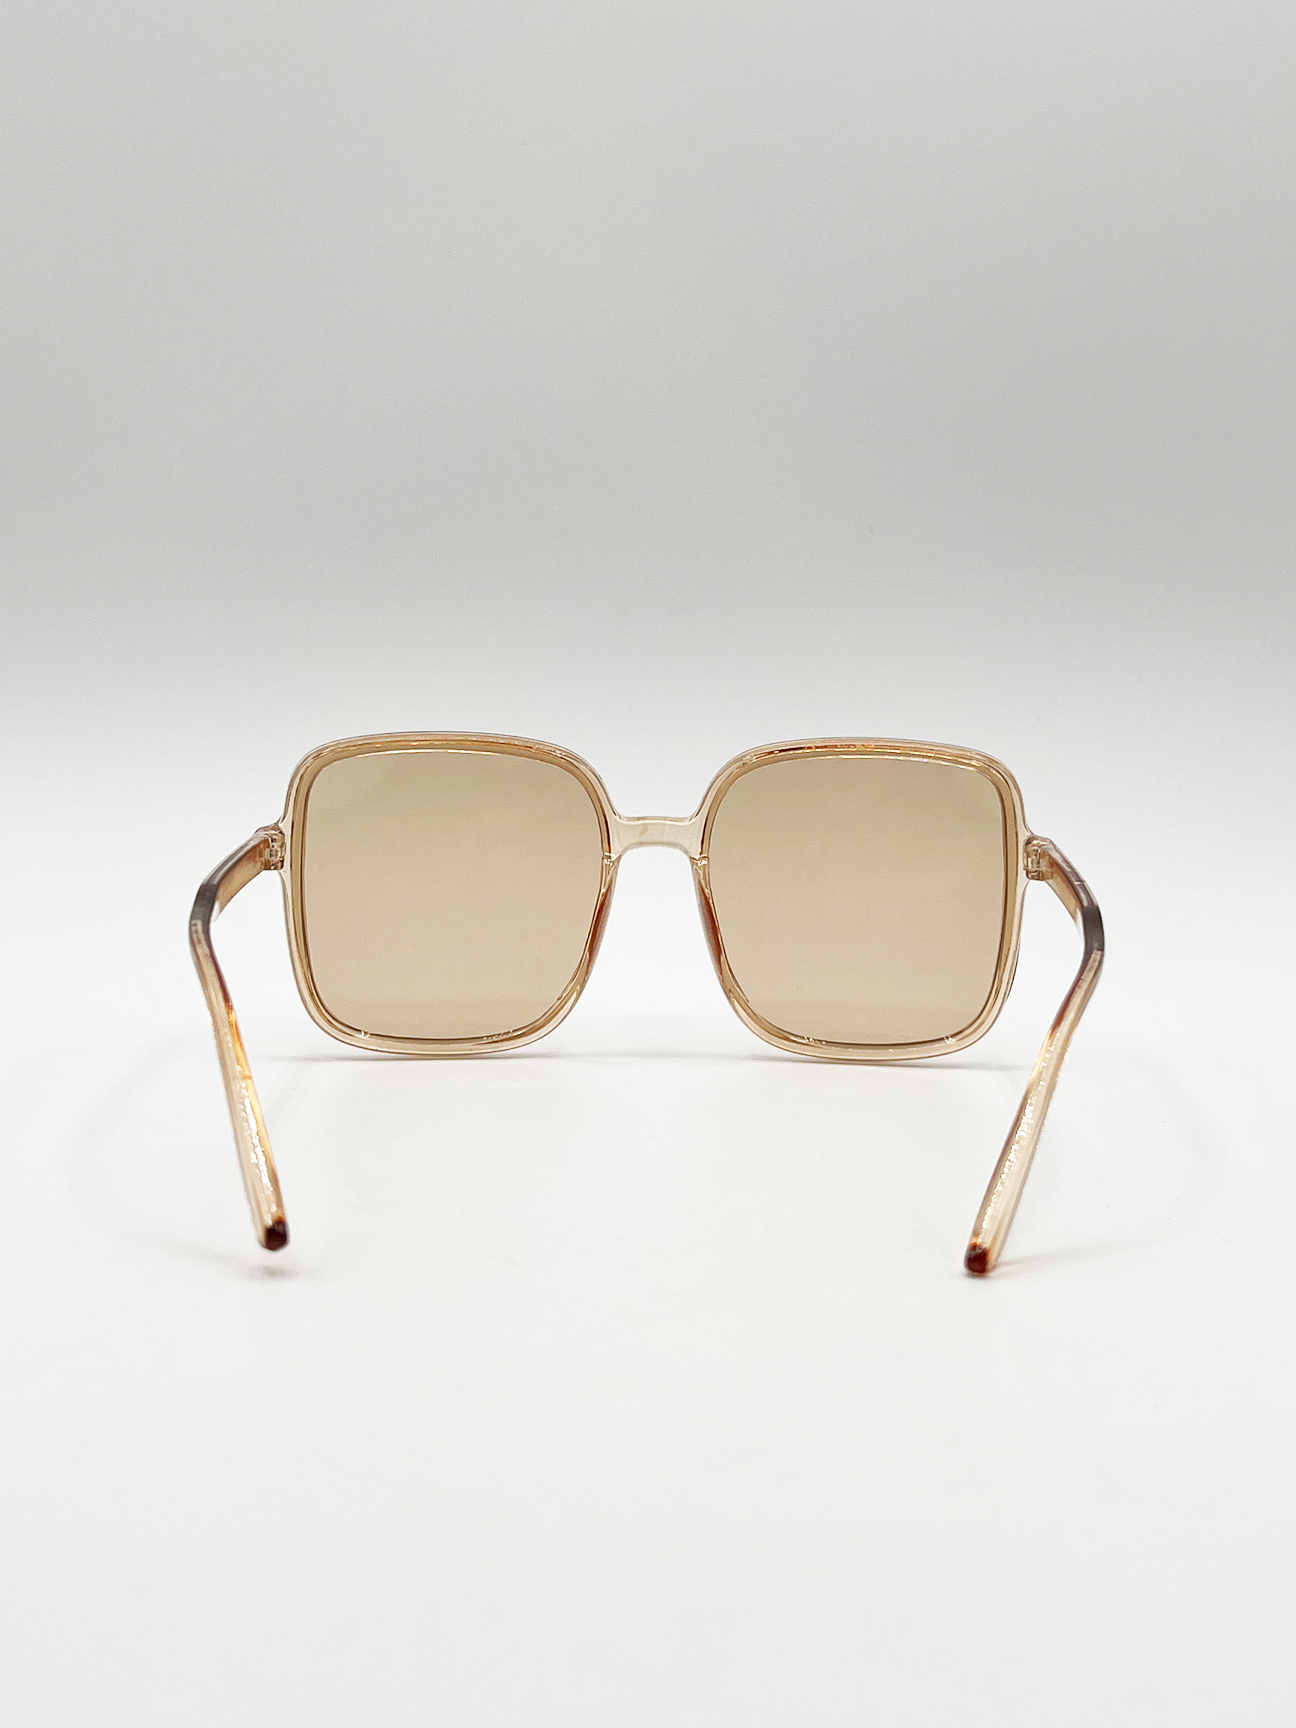 Oversized Lightweight Square Frame Sunglasses in Light Brown